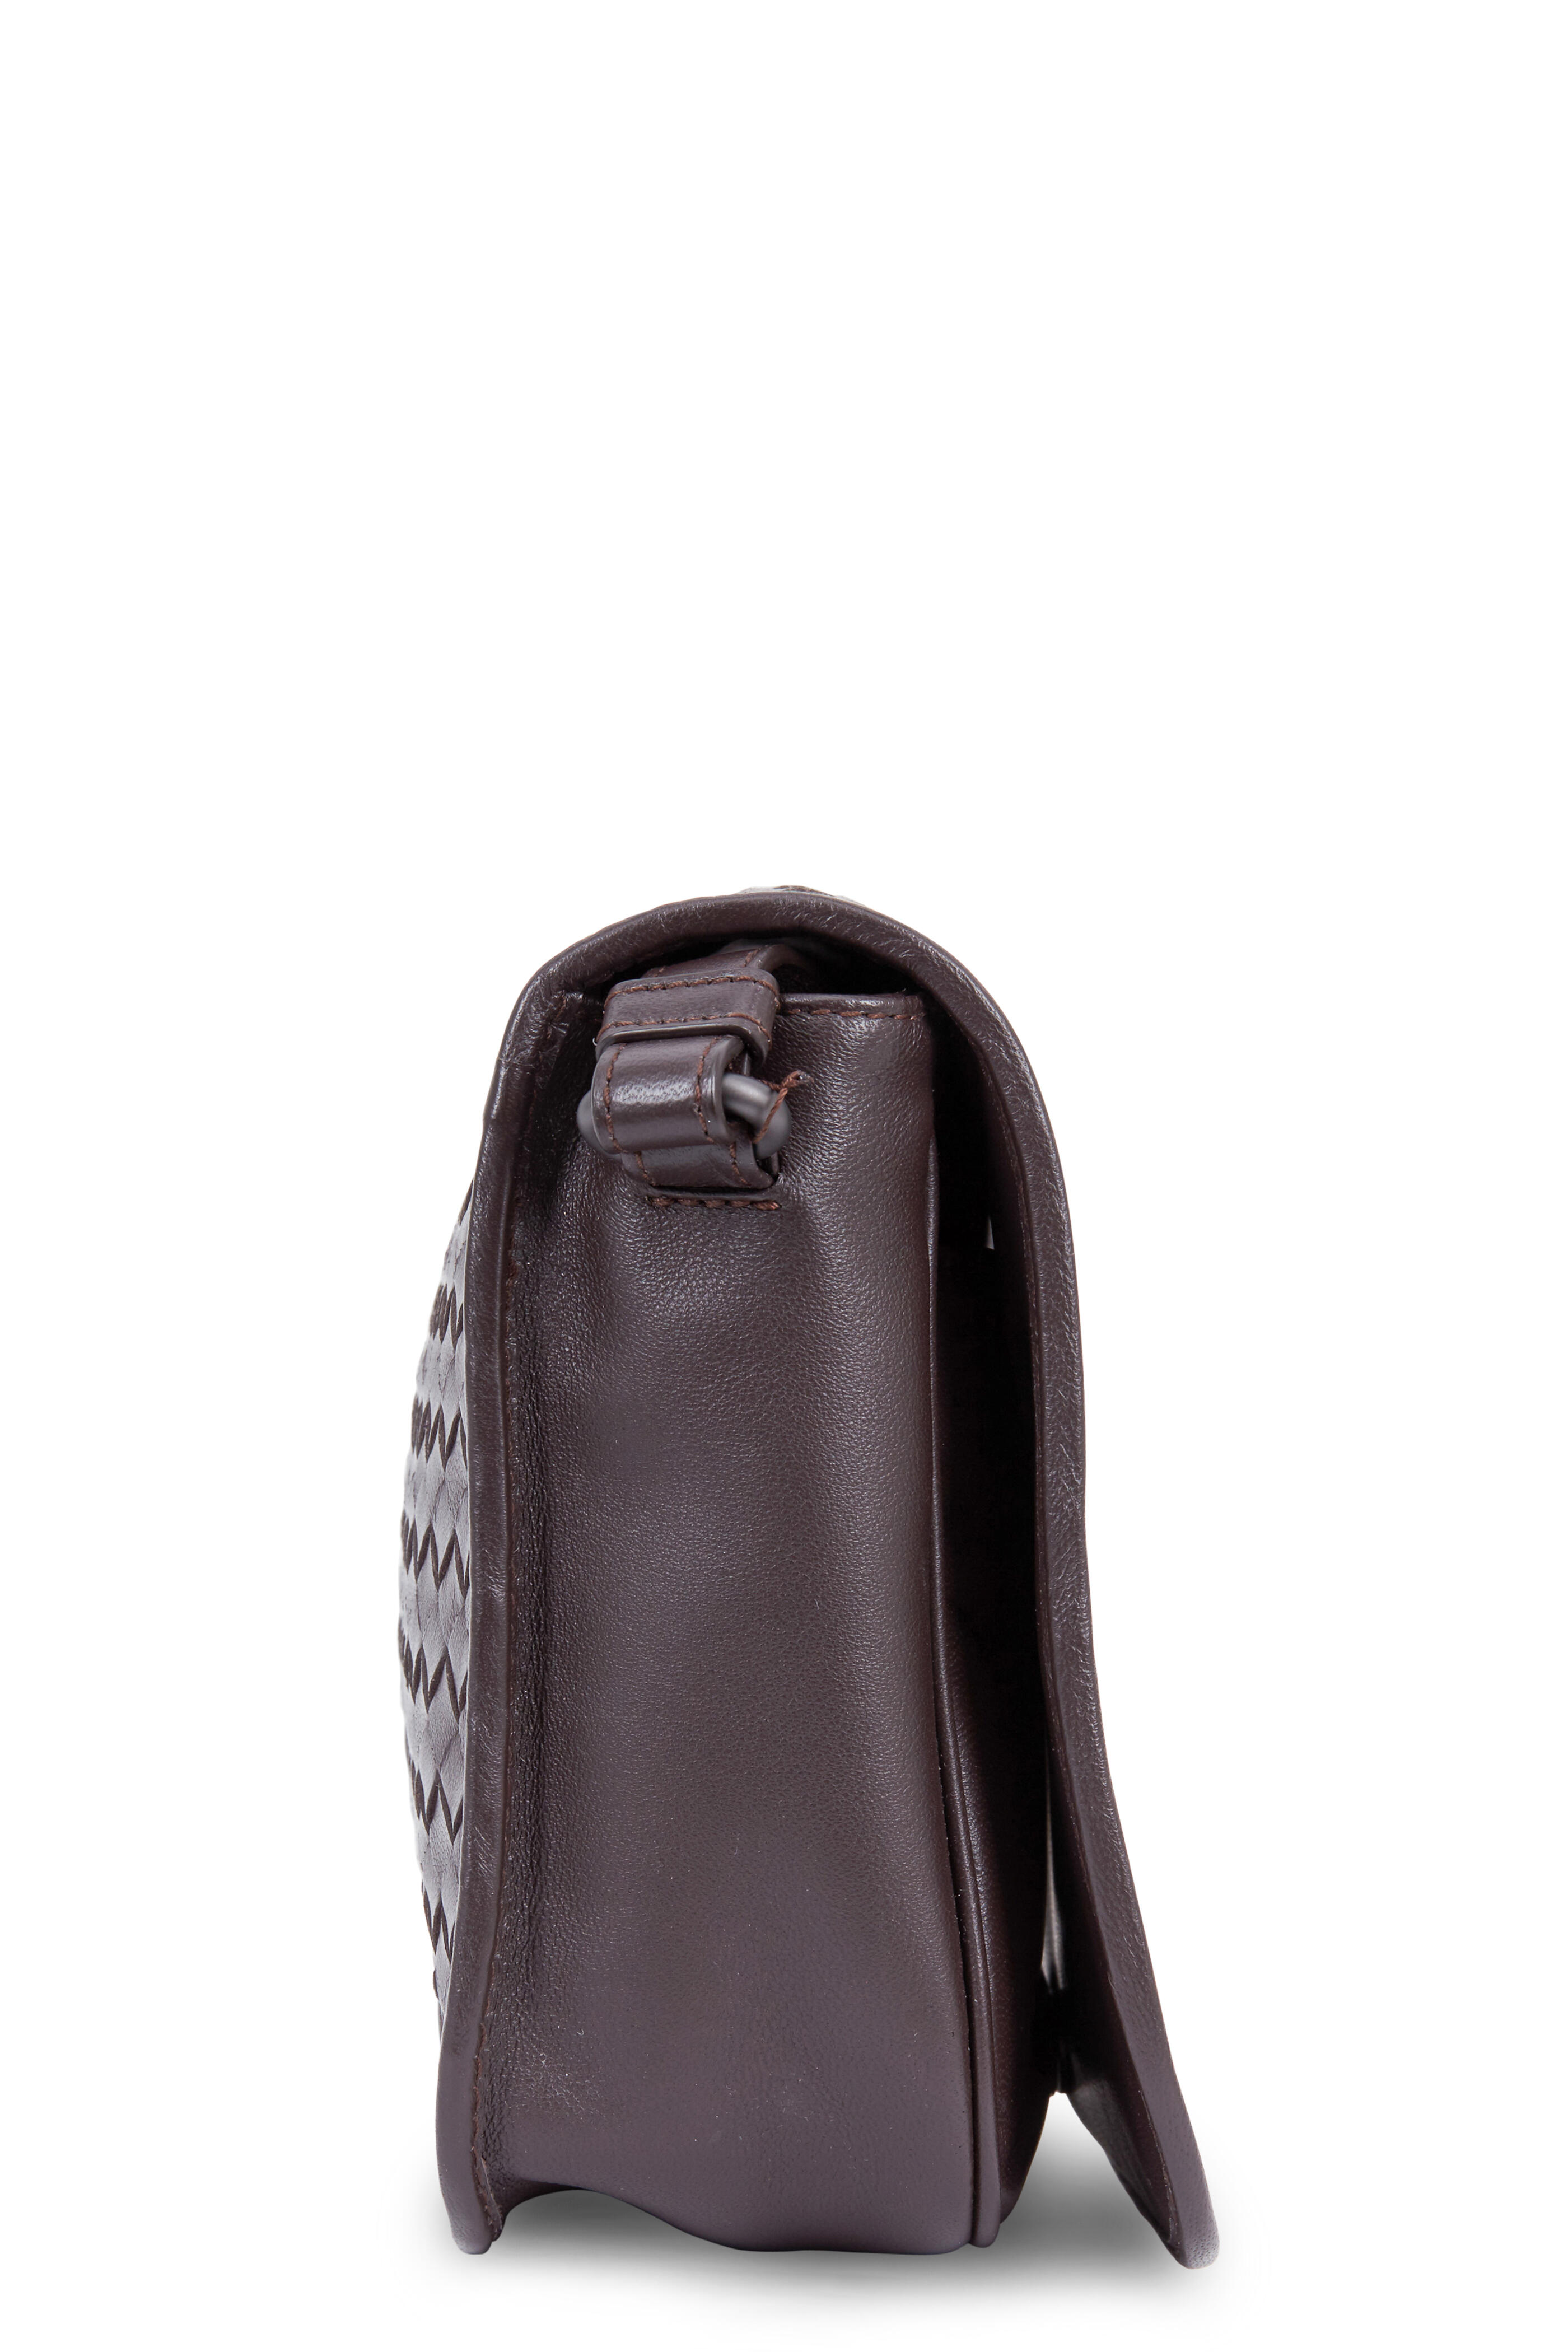 Bottega Veneta Small Intrecciato Leather Crossbody Bag